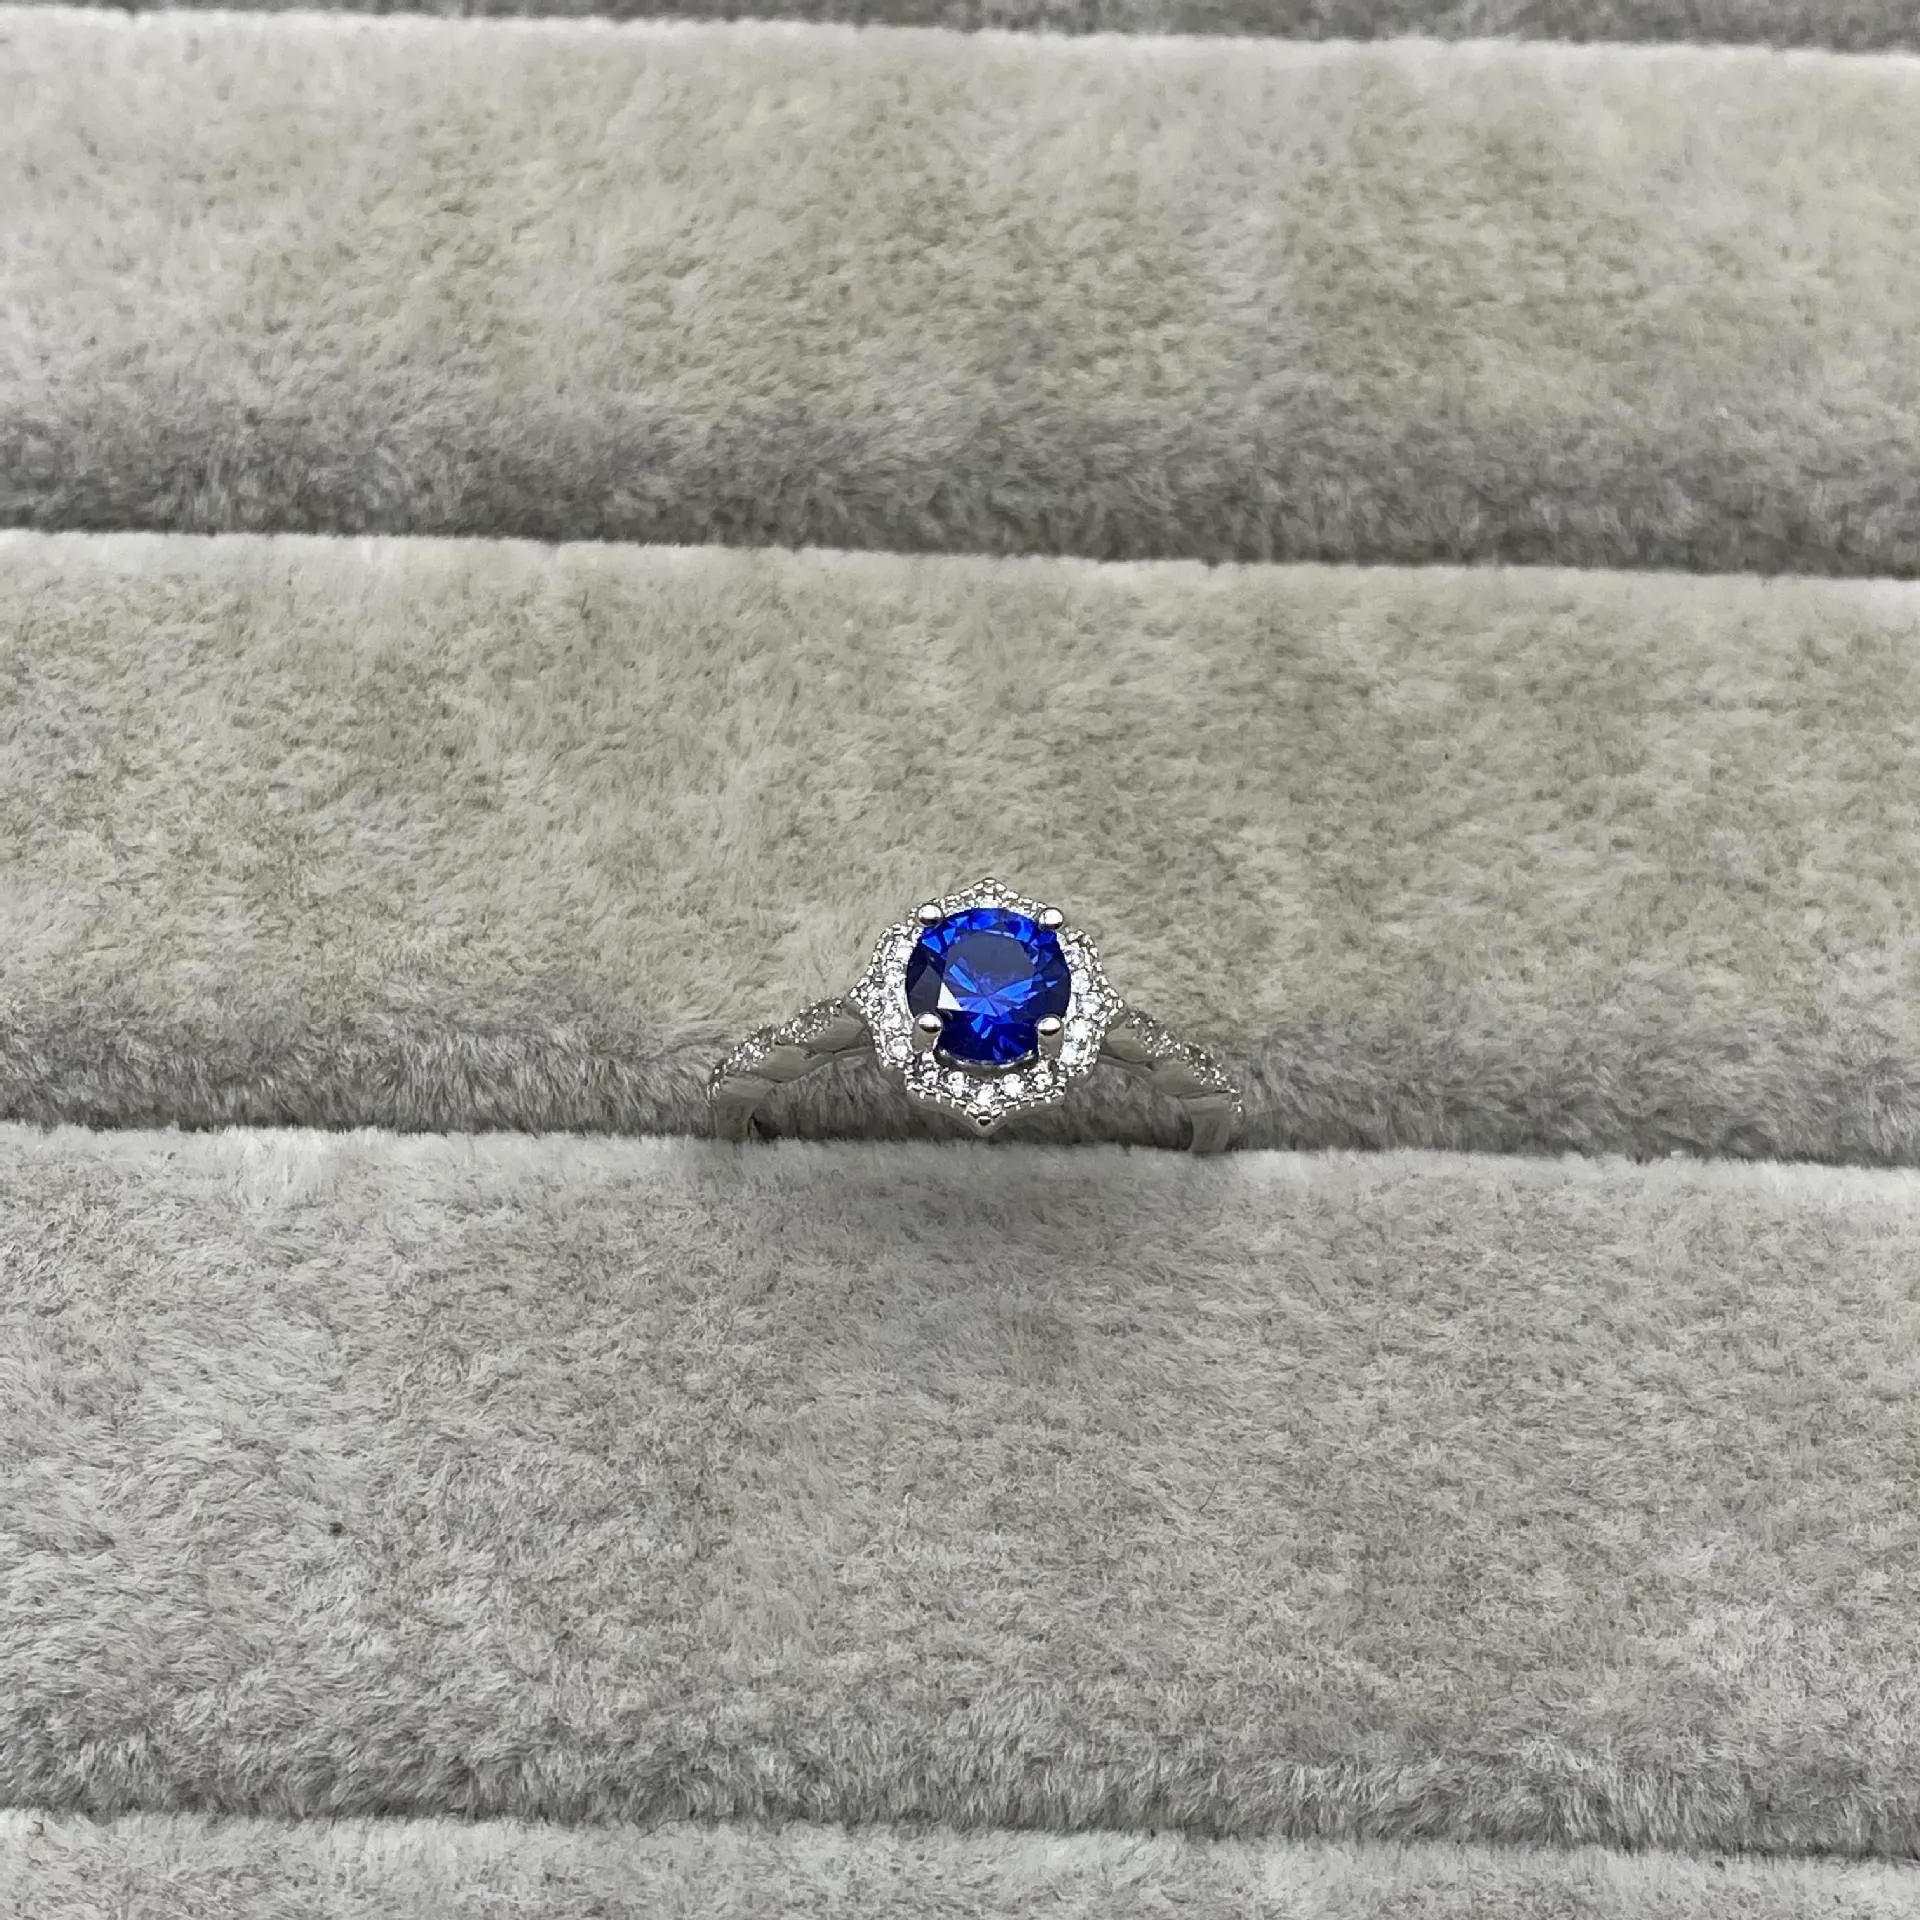 2023 Novo S925 Prata Deluxe Oval Azul Pagoda Conjunto de Pedras Anel de Diamante Personalidade Elegante Anel de Casamento Anel Feminino